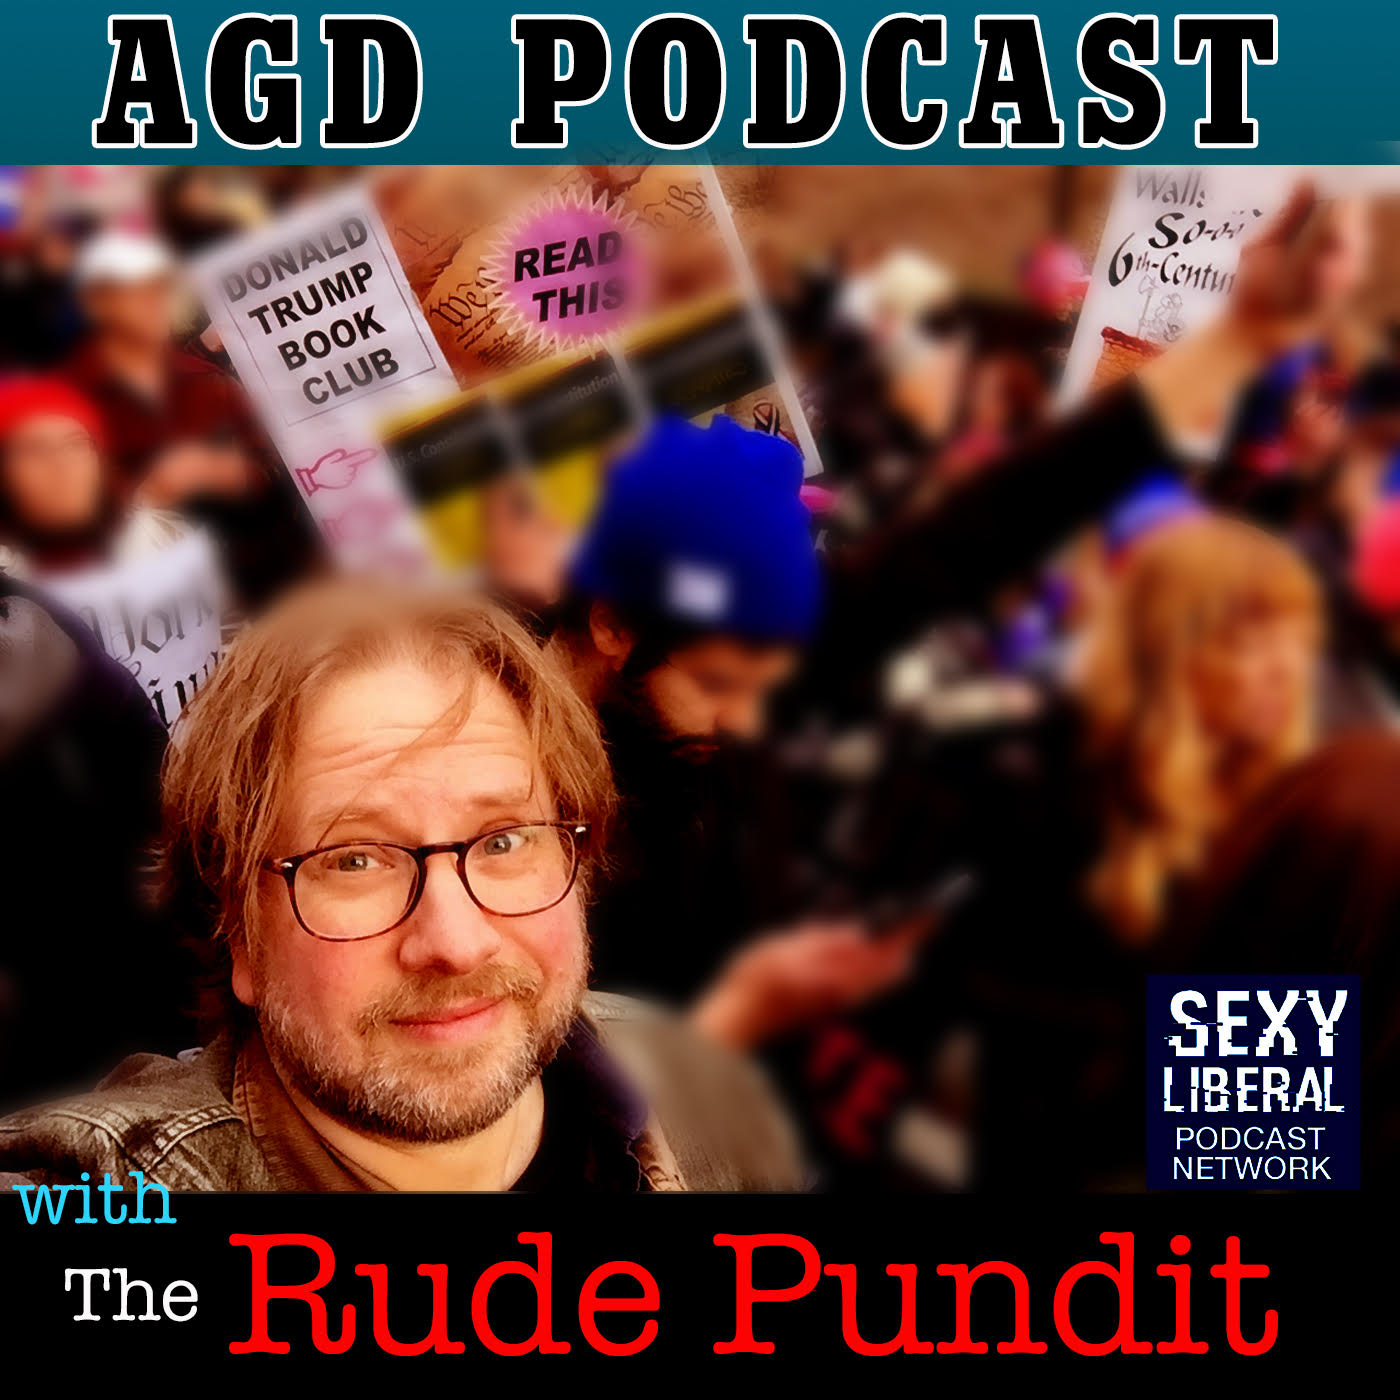 AGD Podcast: Rude Rant on Lewandowski, Trump, and Traitors